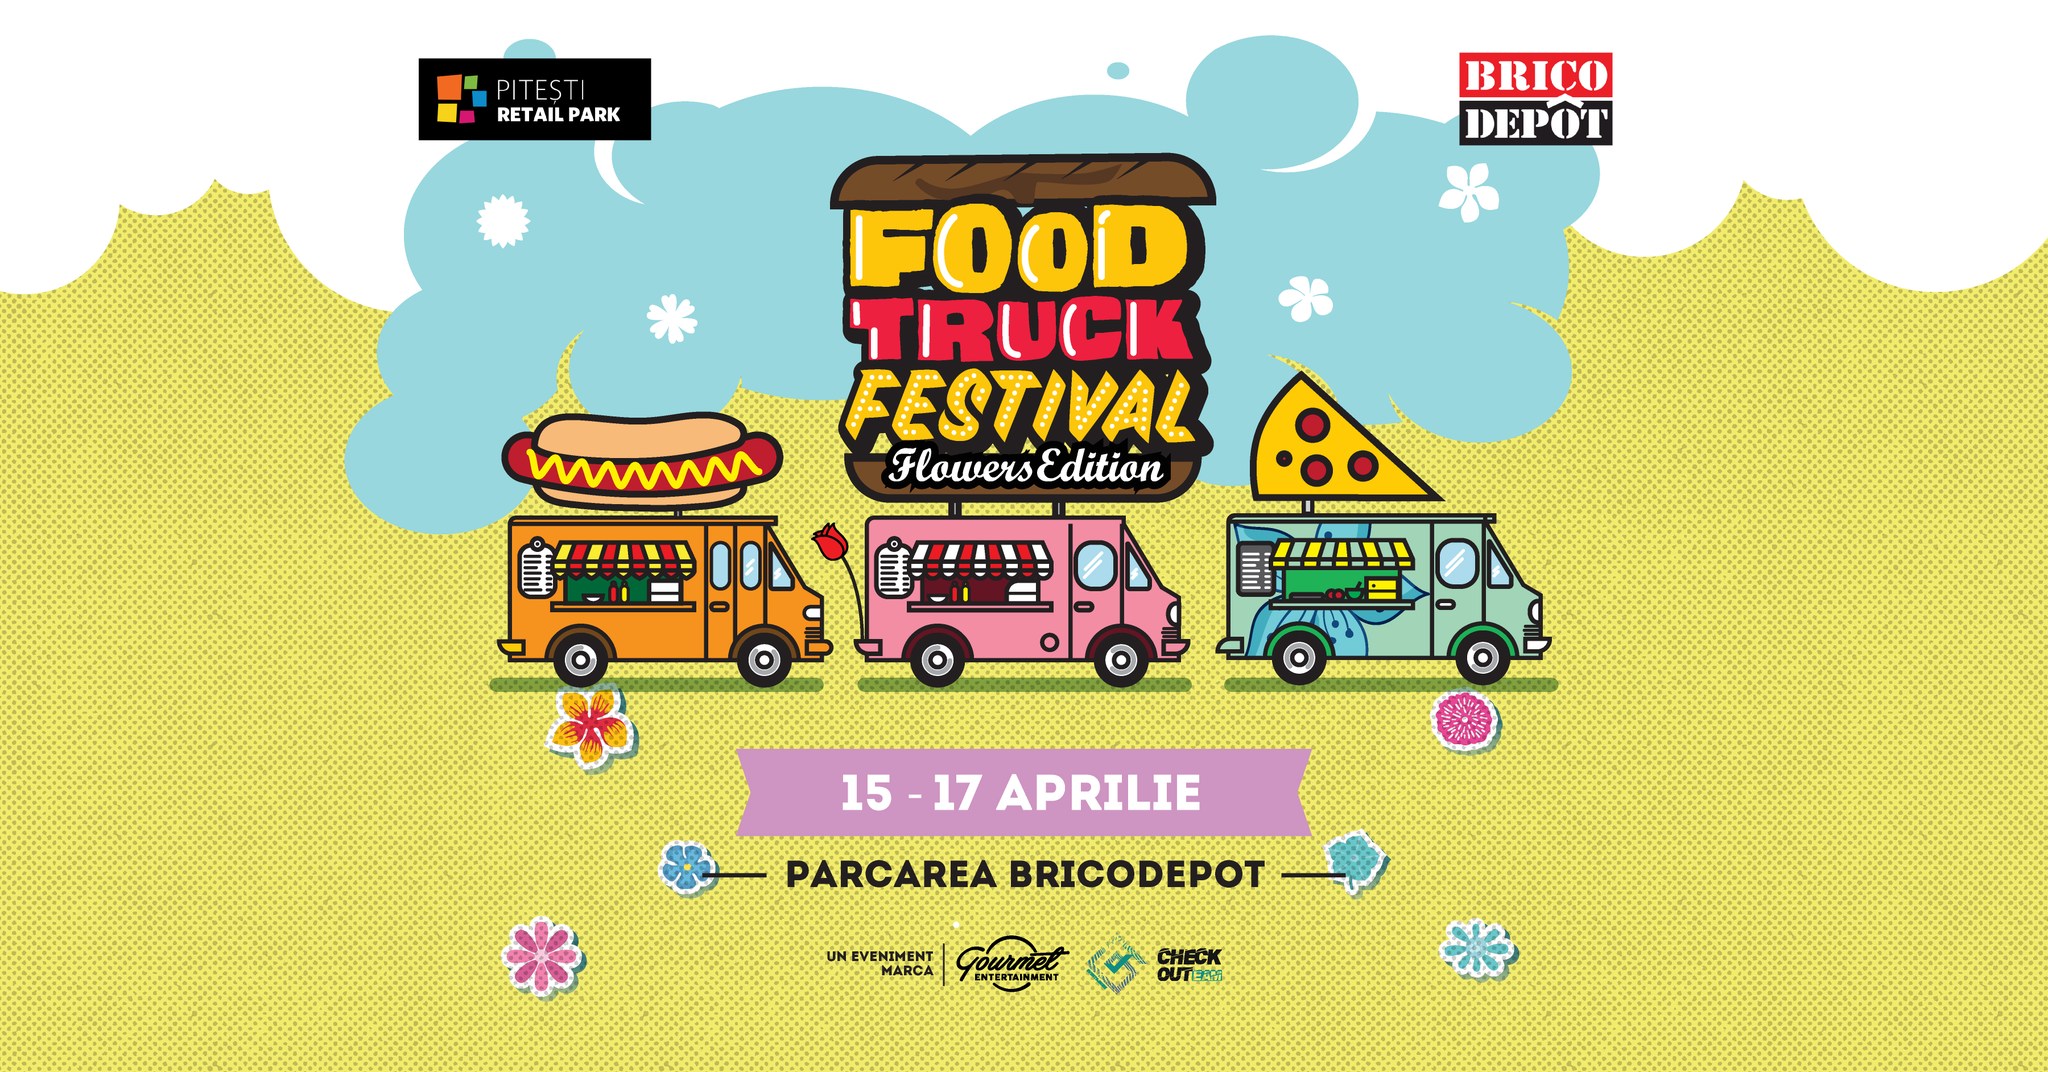 Food Truck Festival: Flowers Edition